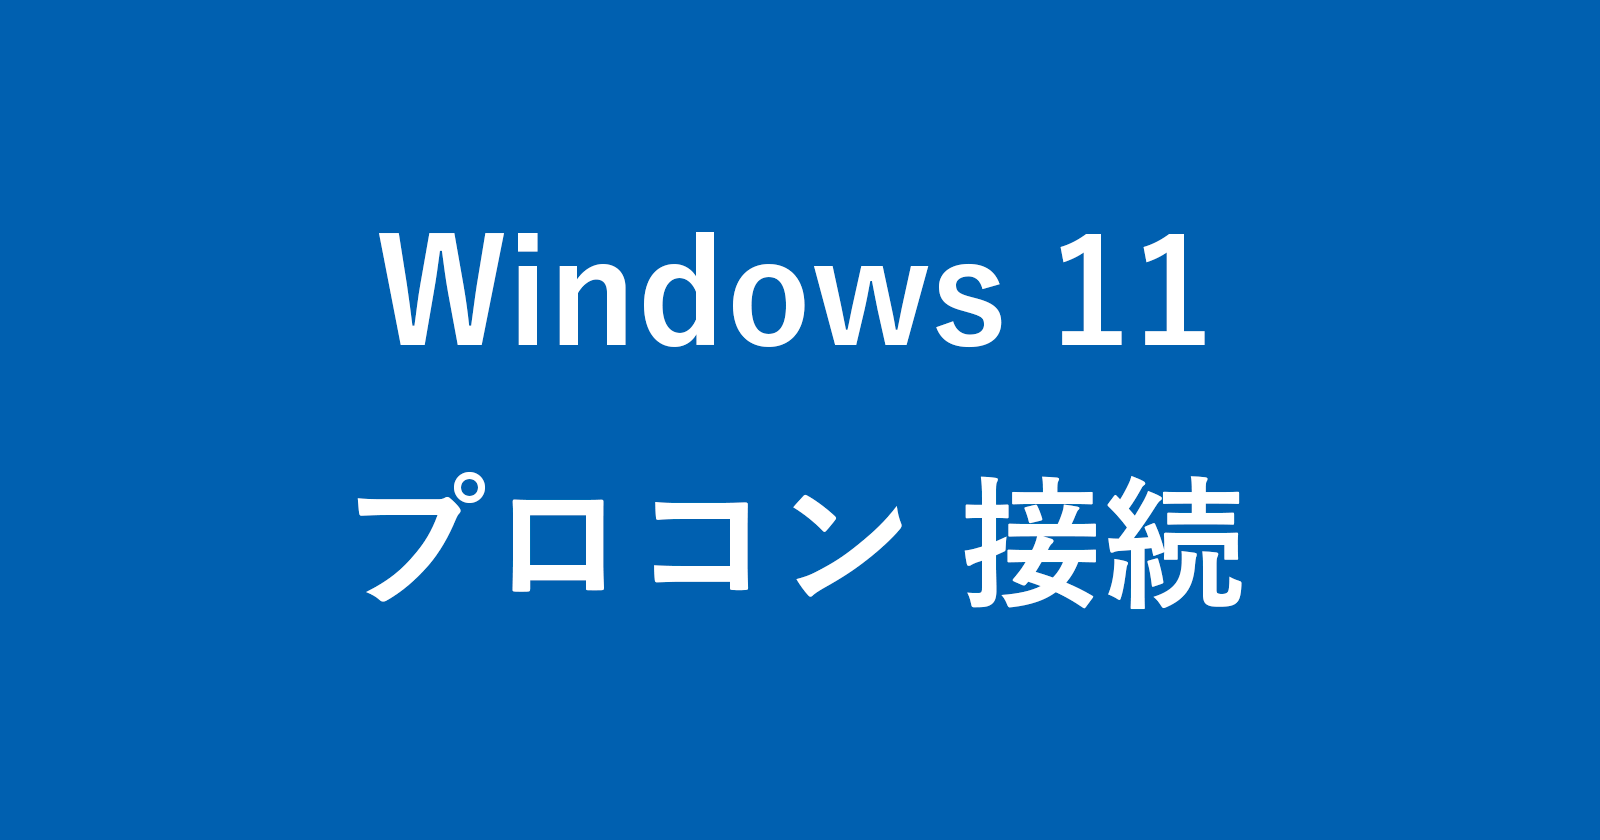 windows 11 switch controller